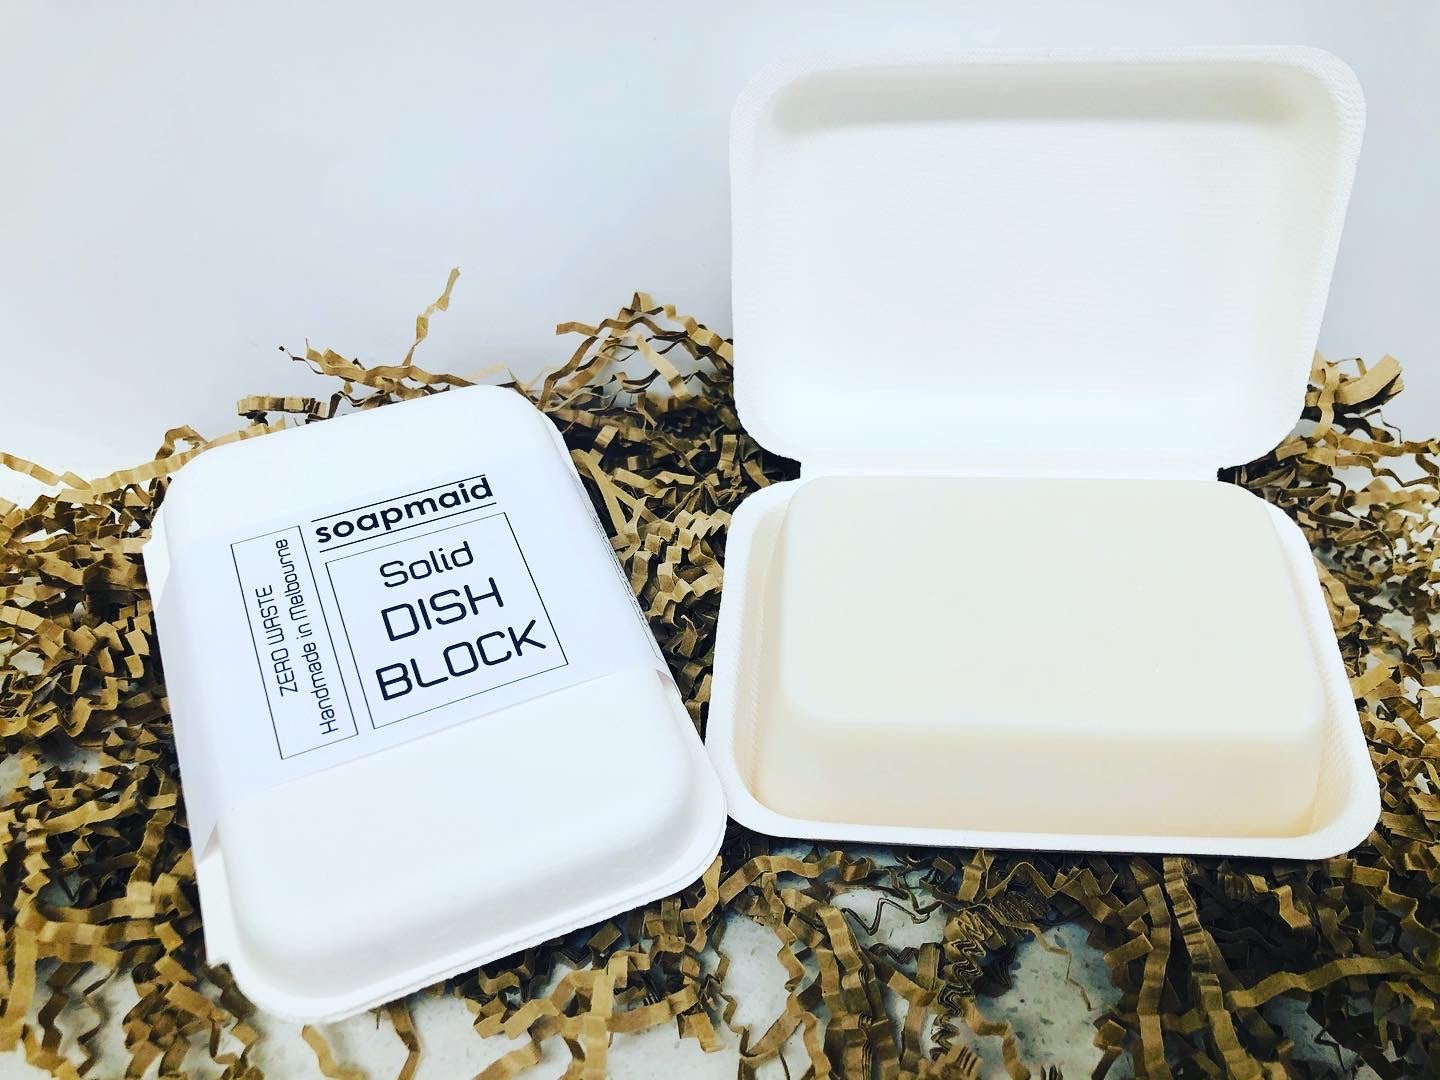 DISH BLOCK - Soapmaid